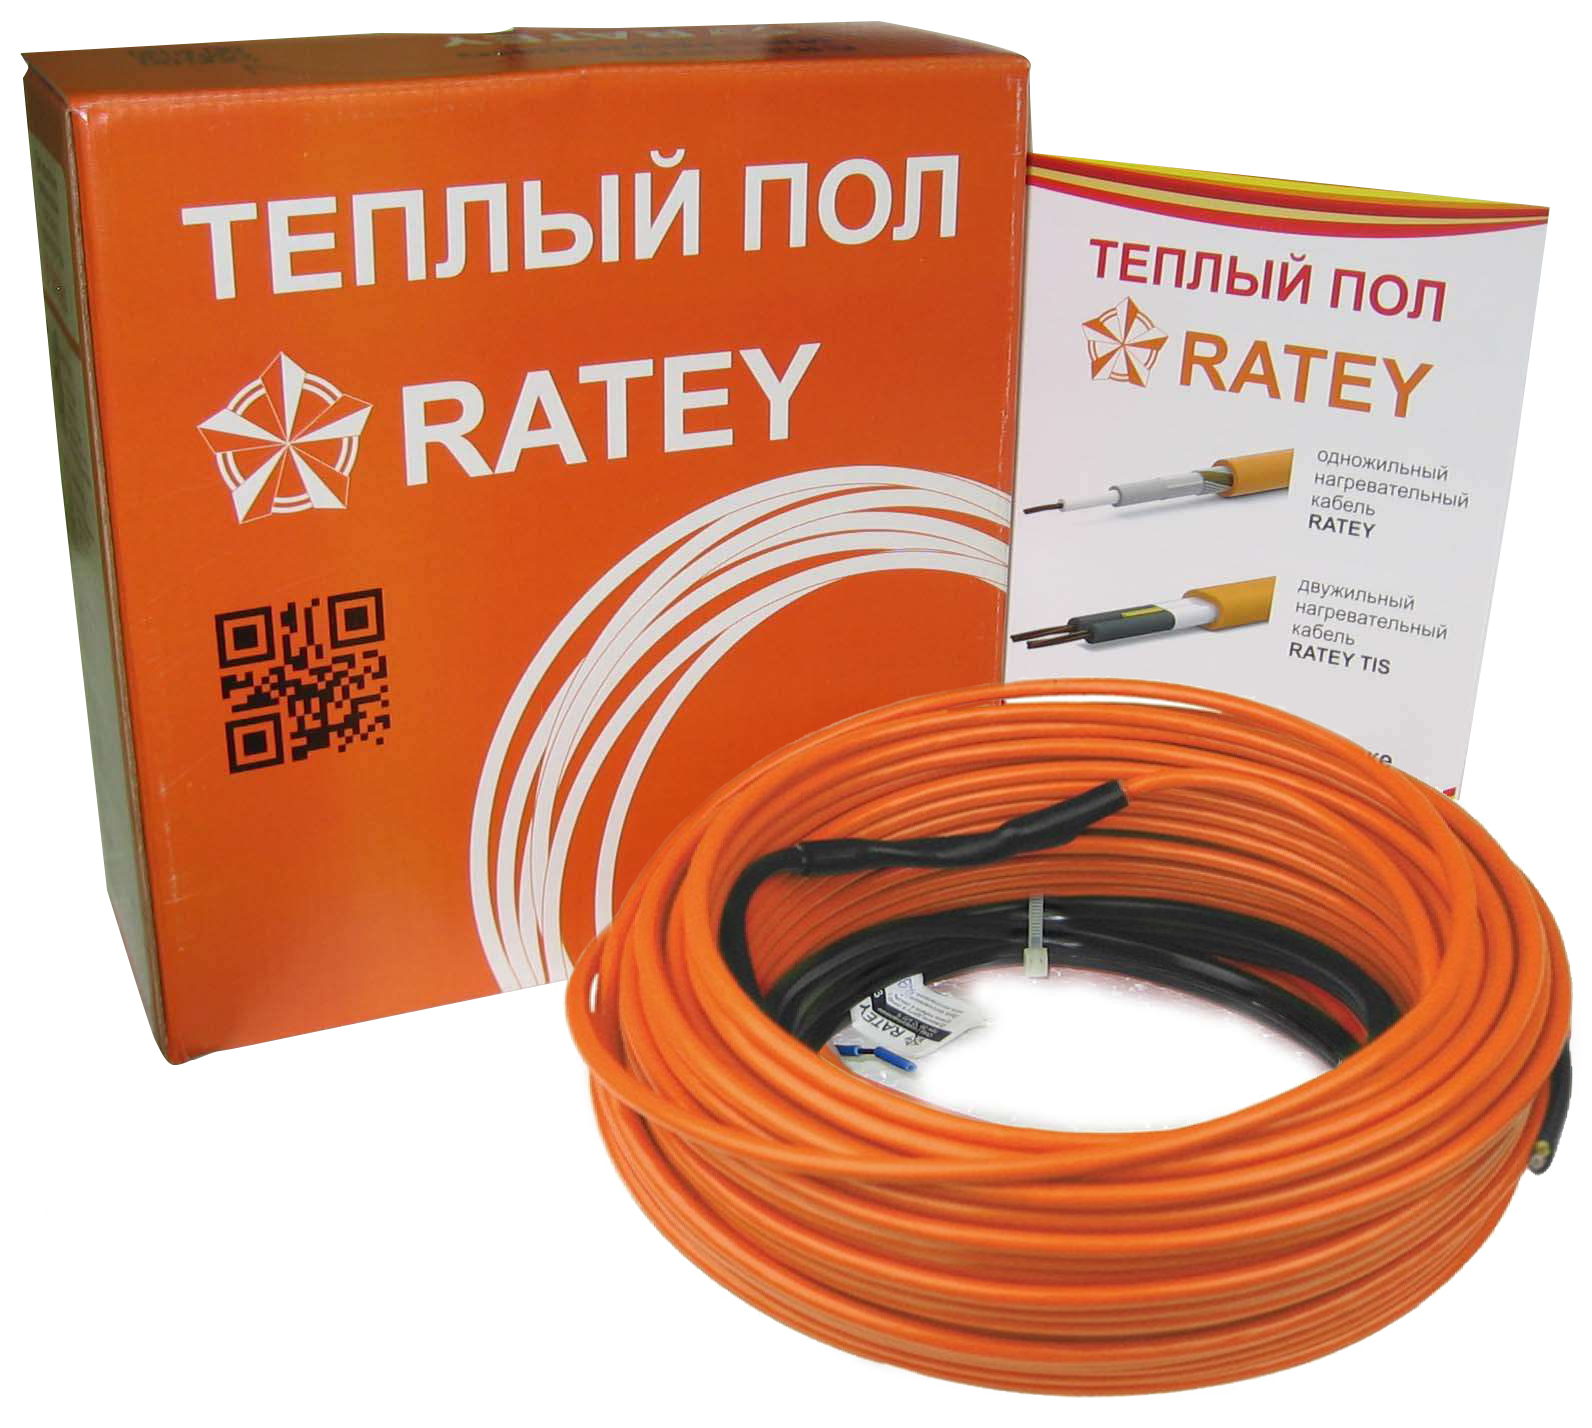 Электрический теплый пол Ratey RD1 0.820